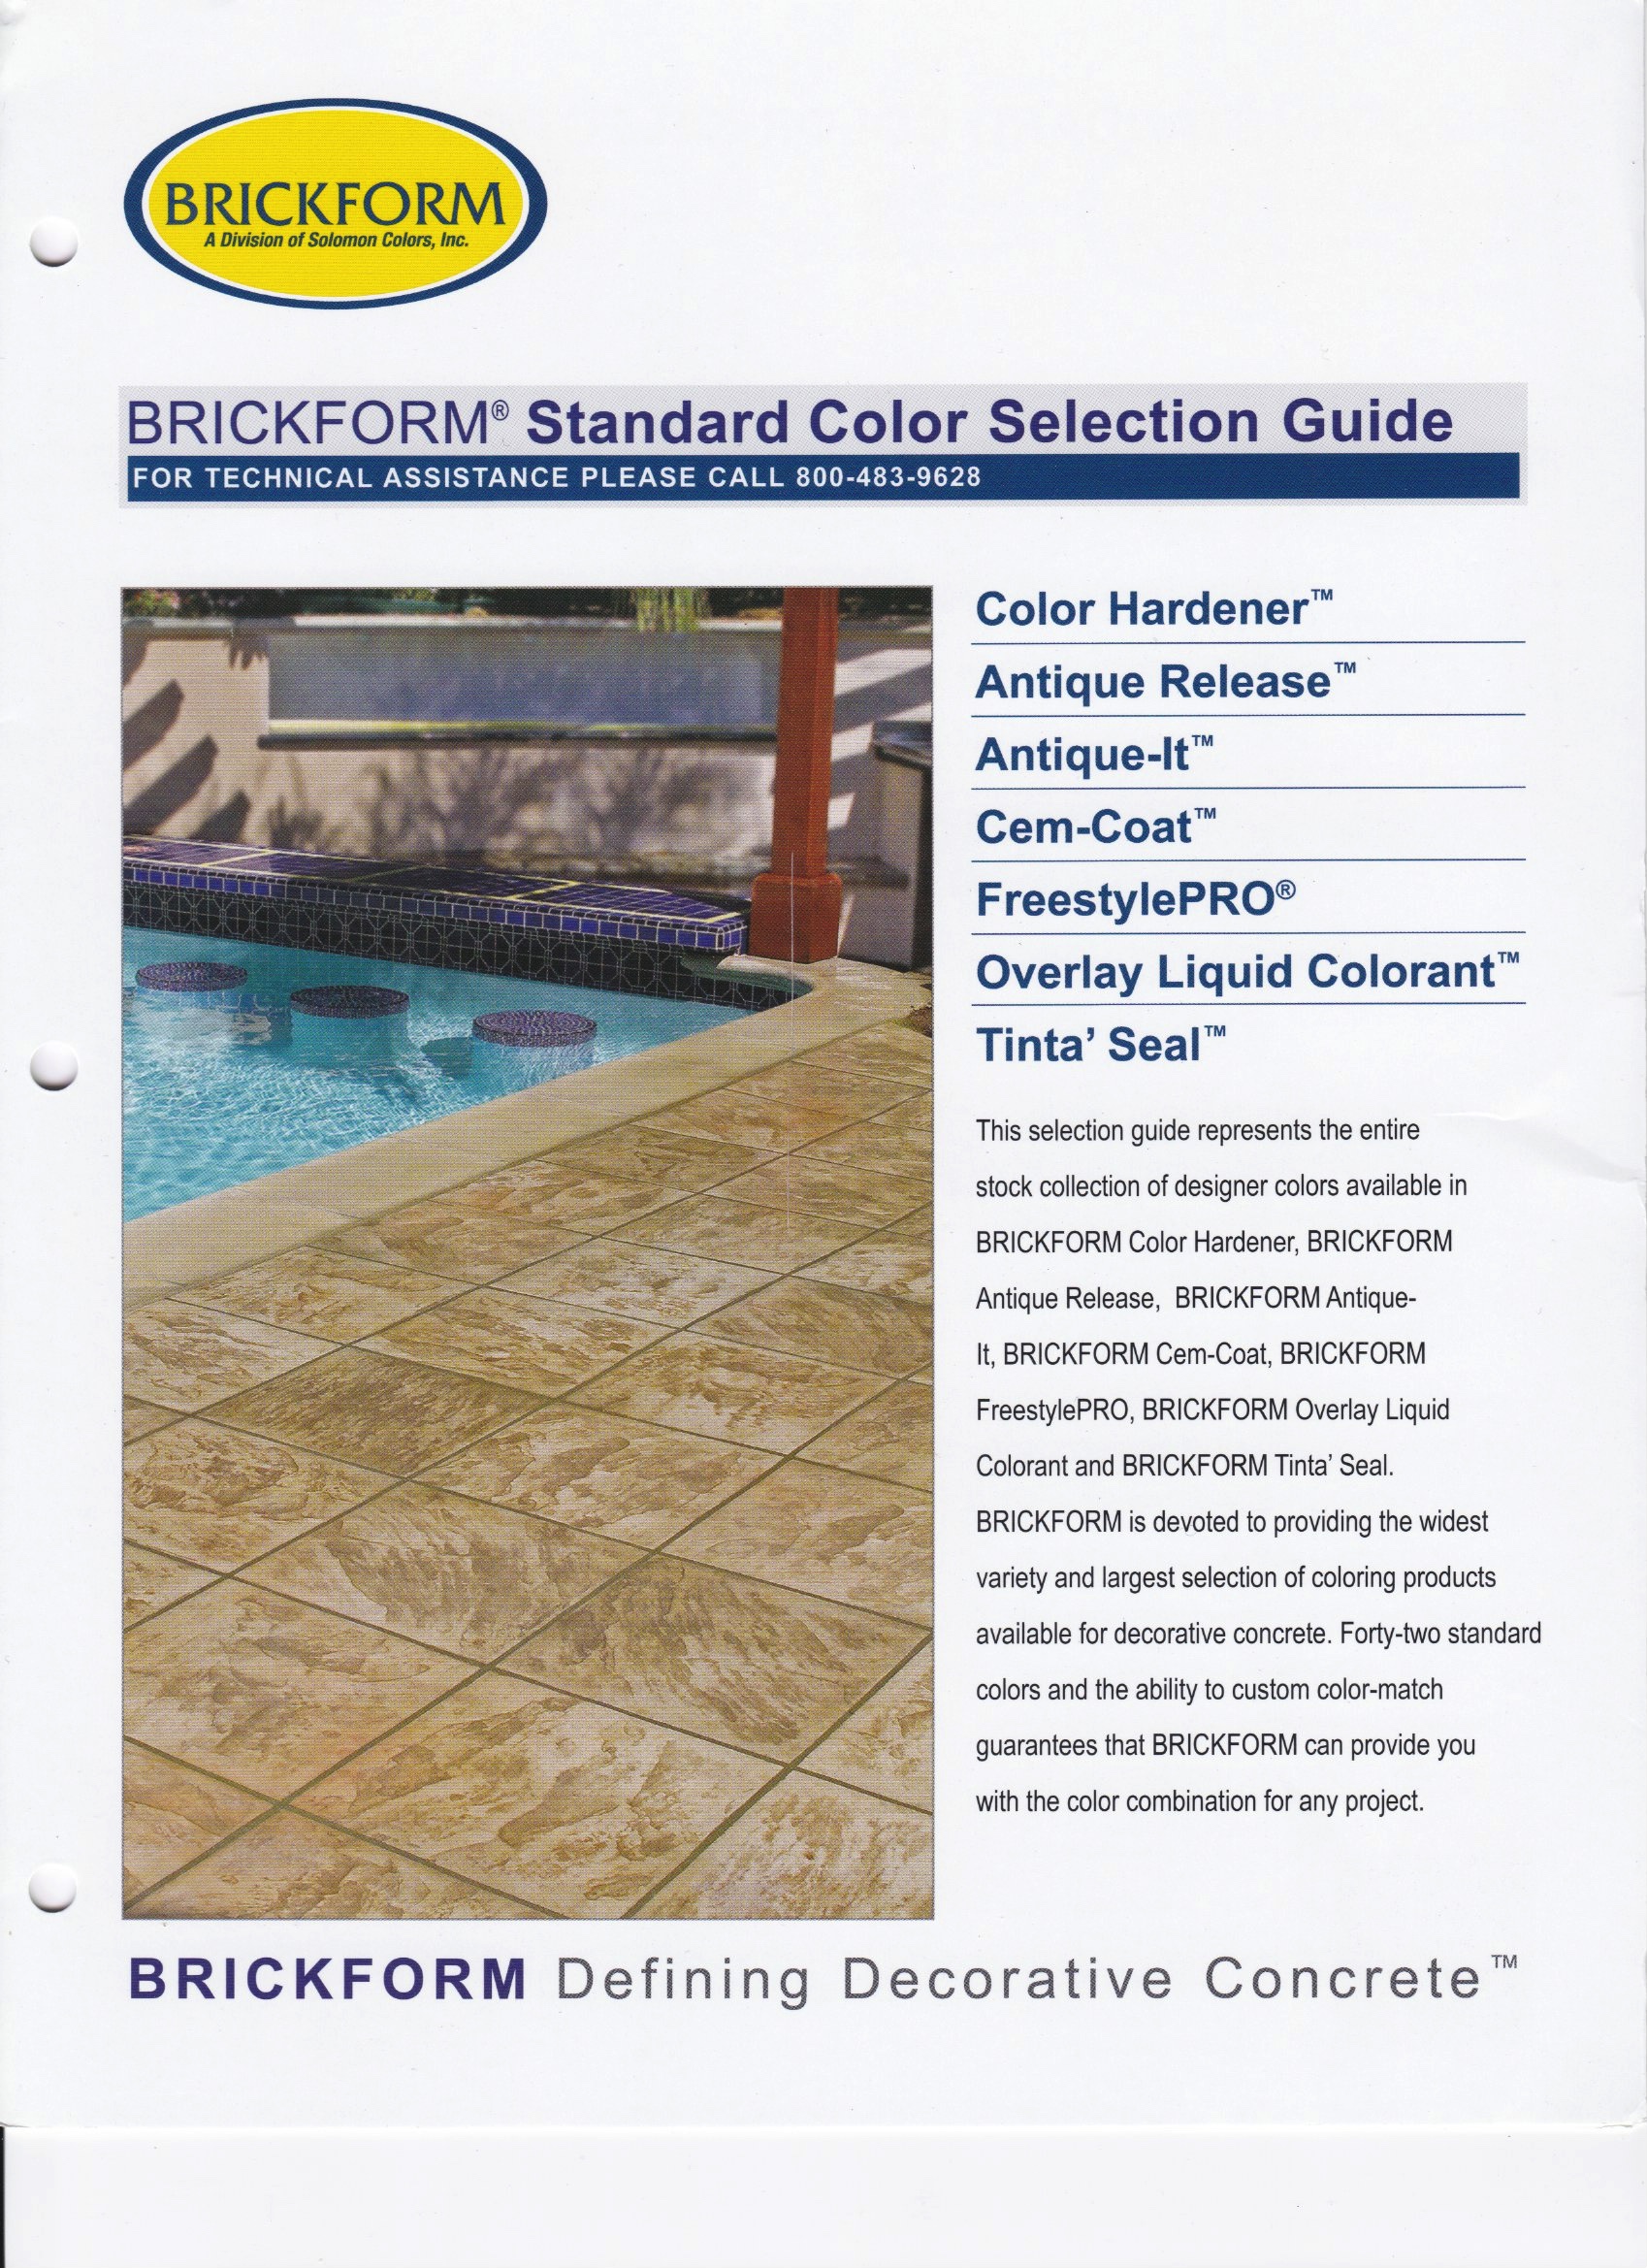 Brickform Standard Color Selection Guide